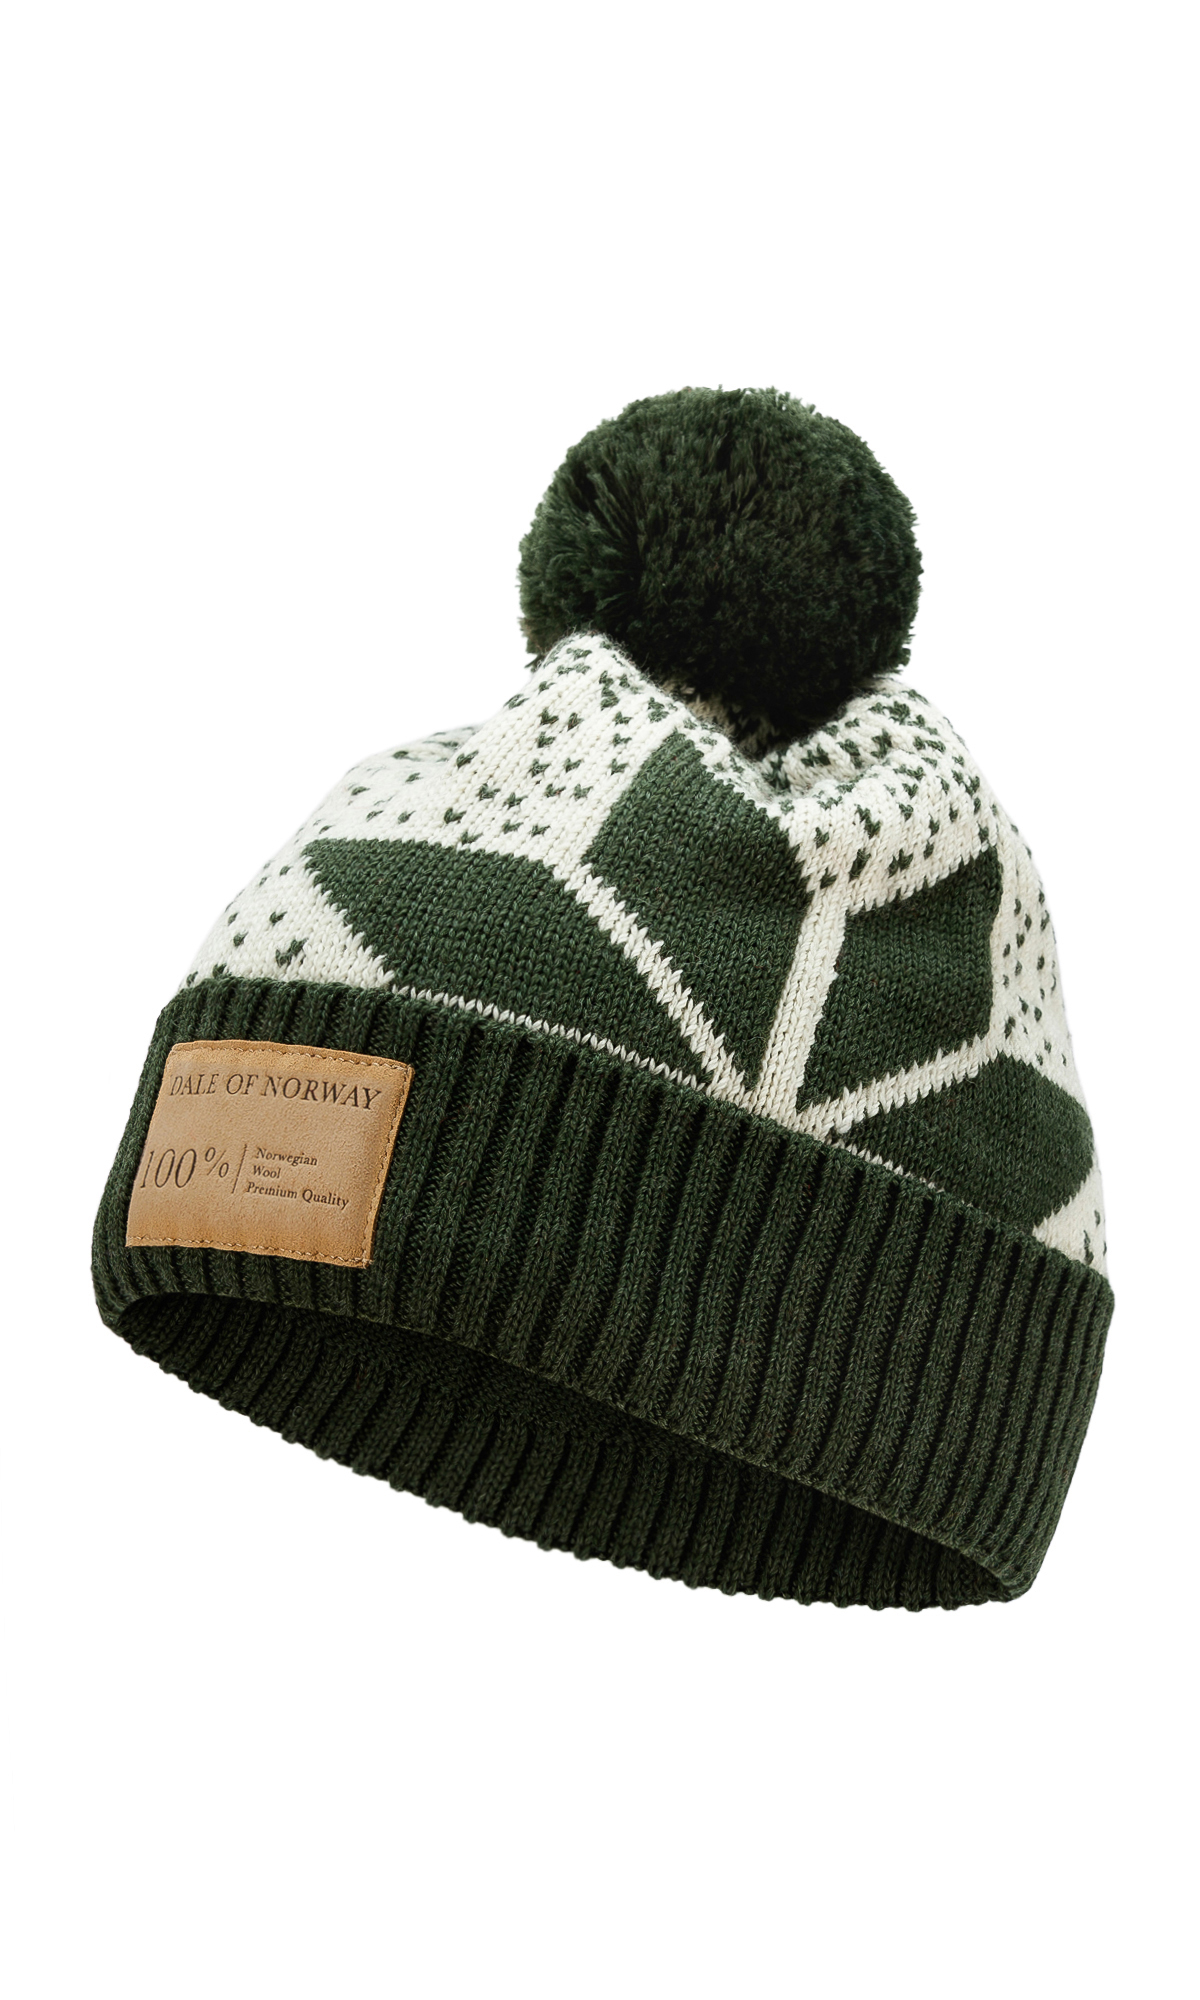 Winter Star hat - Unisex - Dark green - Dale of Norway - Dale of